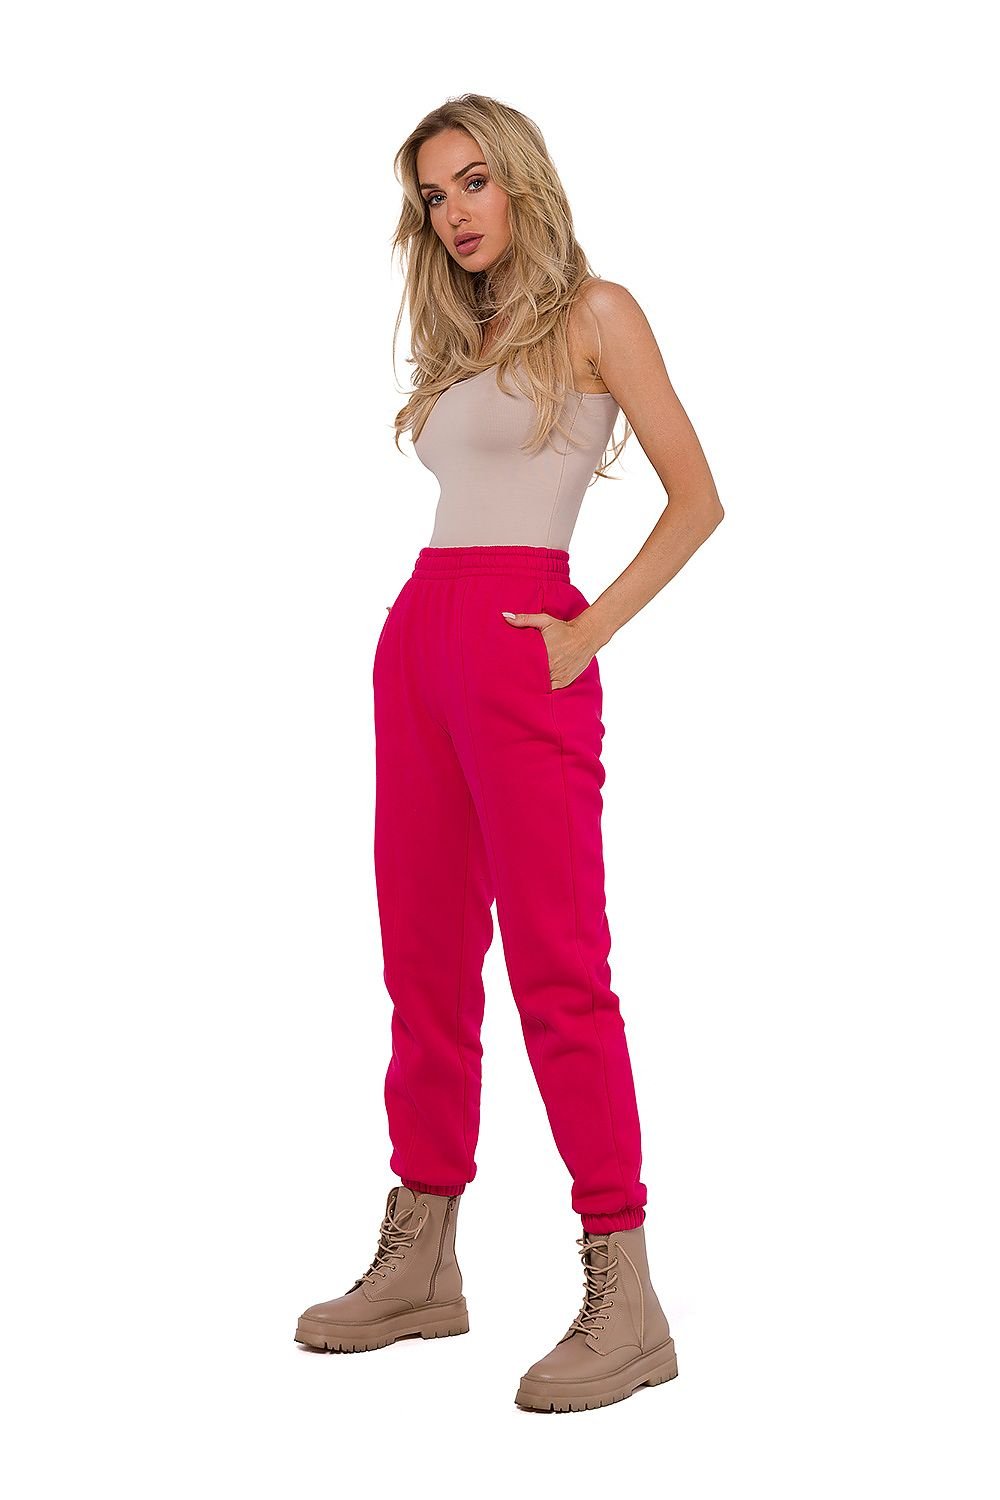 TEEK - Pocketed Sweatpants PANTS TEEK MH pink L 